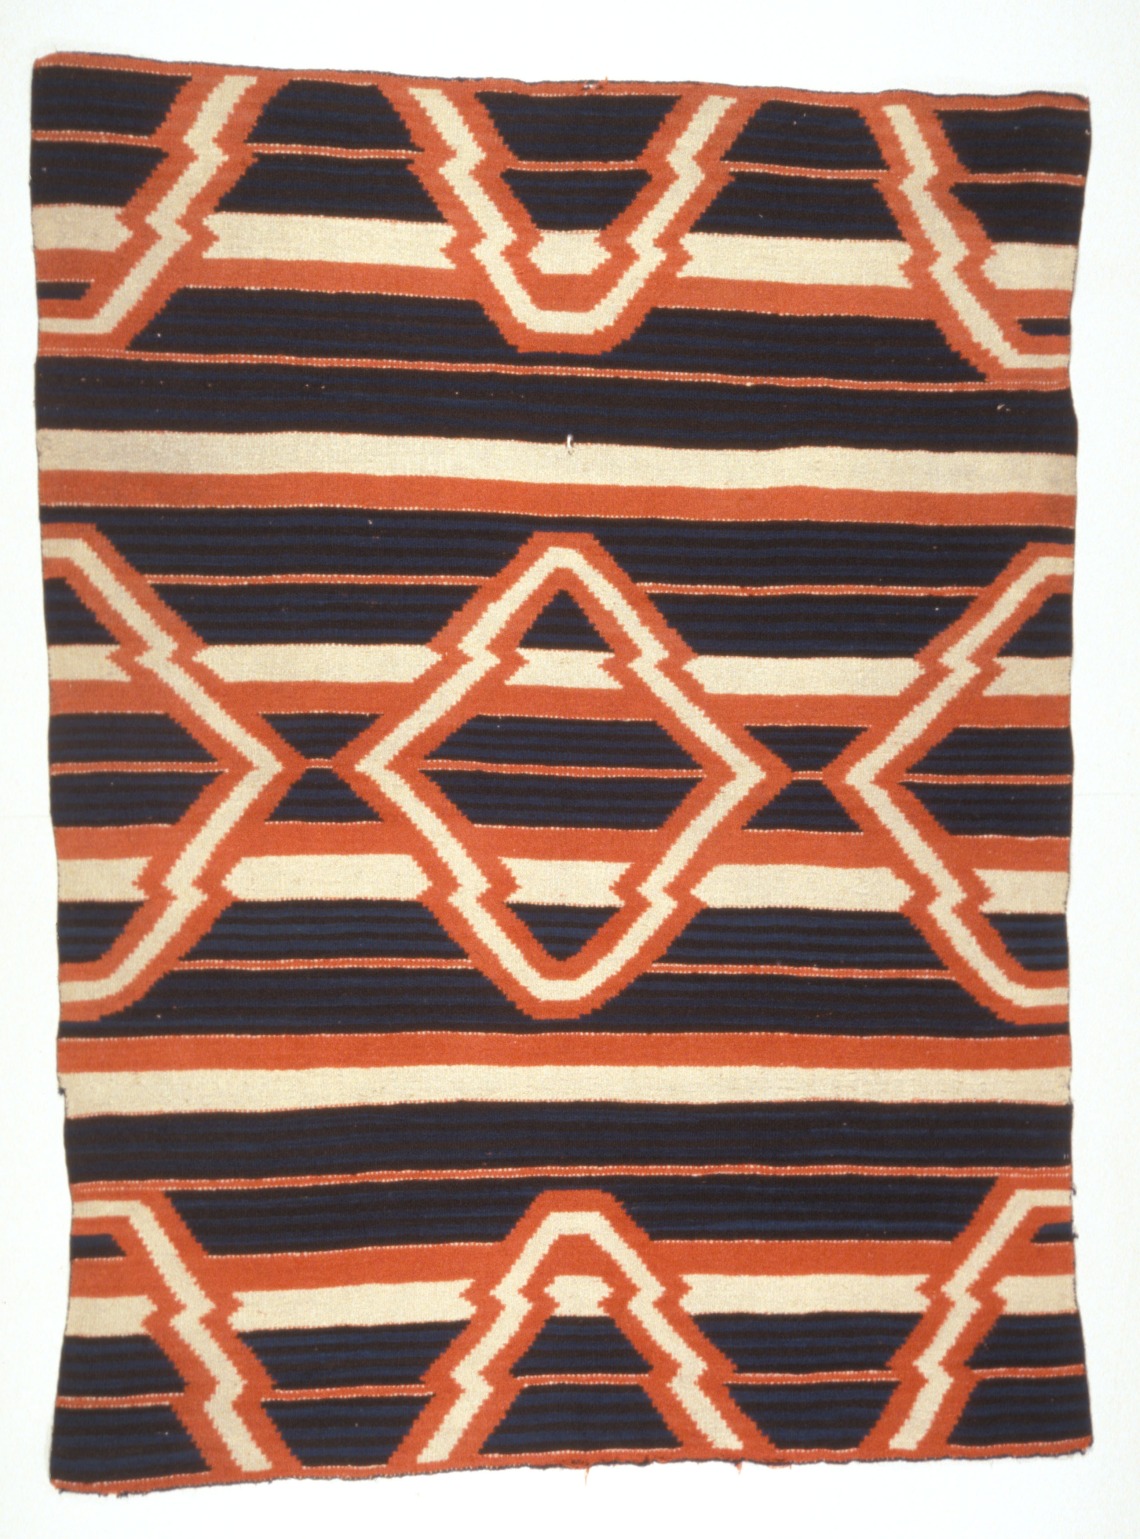 Moqui striped blanket